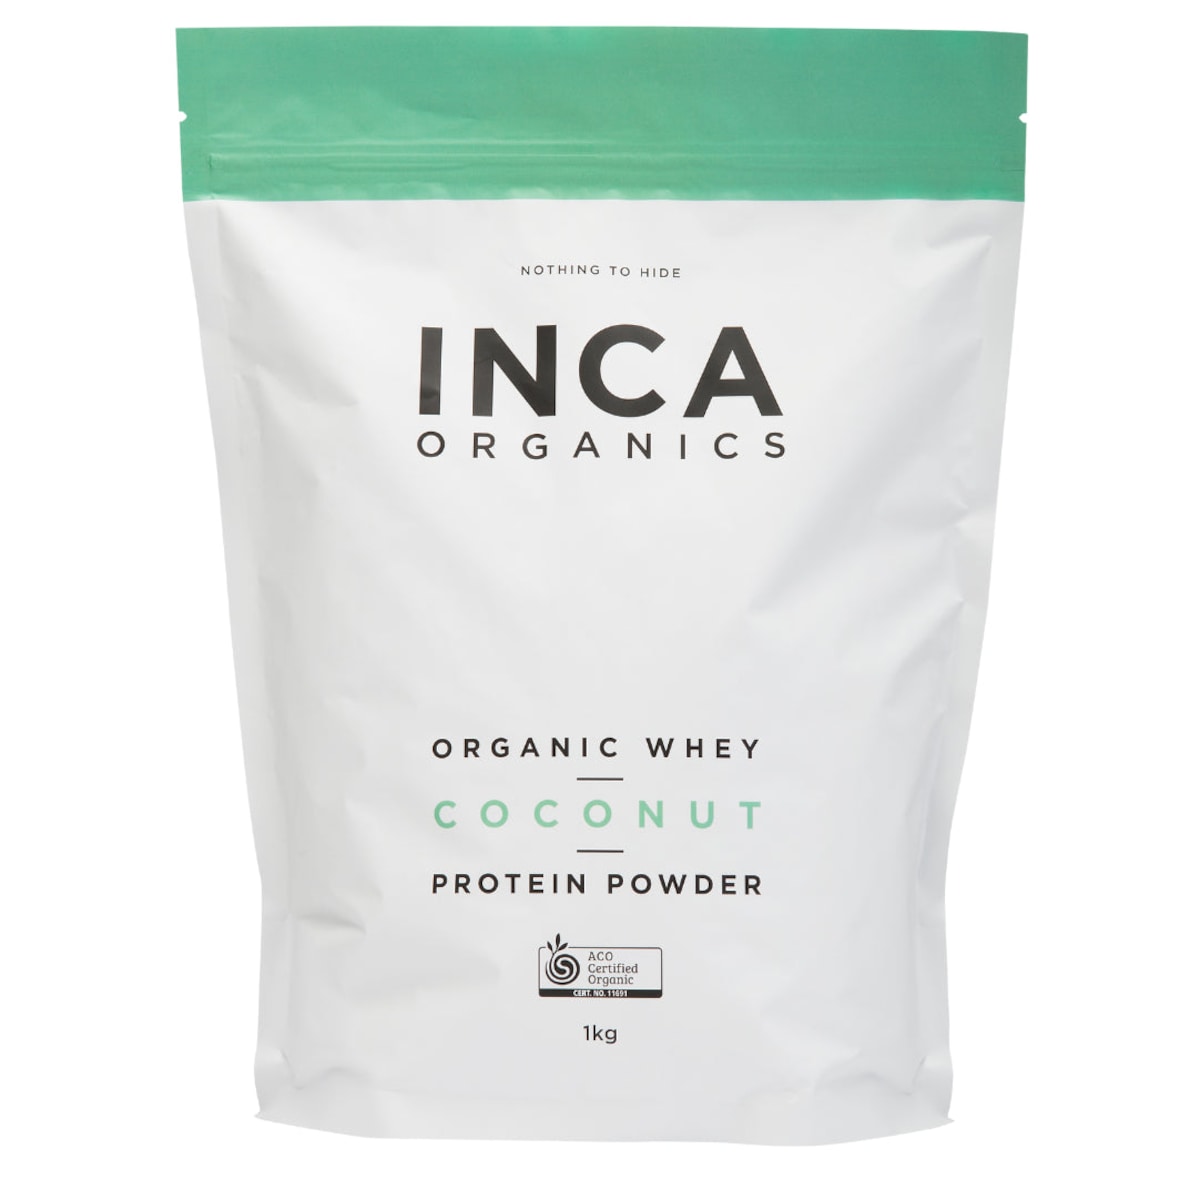 Inca Organics Organic Whey Coconut Protein Powder 1kg Australia